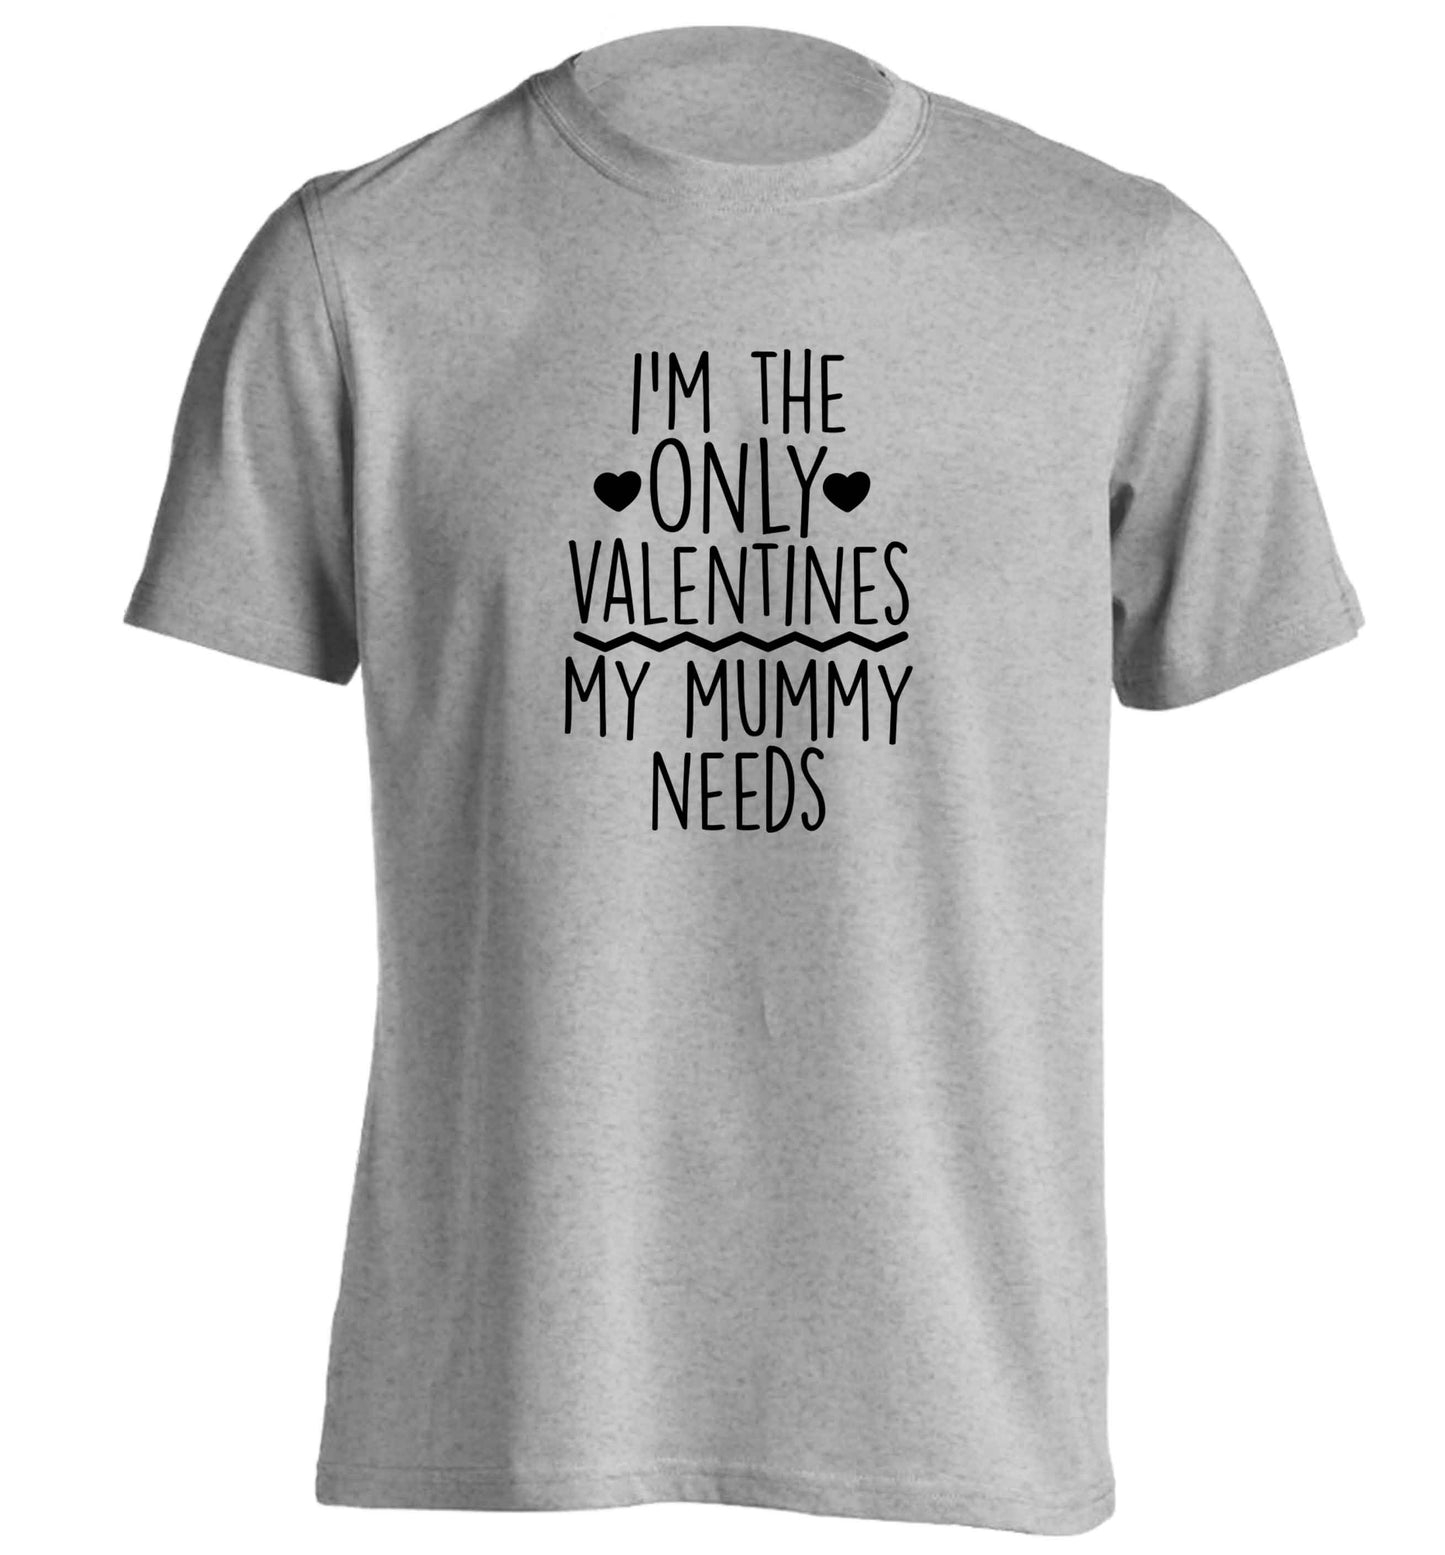 I'm the only valentines my mummy needs adults unisex grey Tshirt 2XL